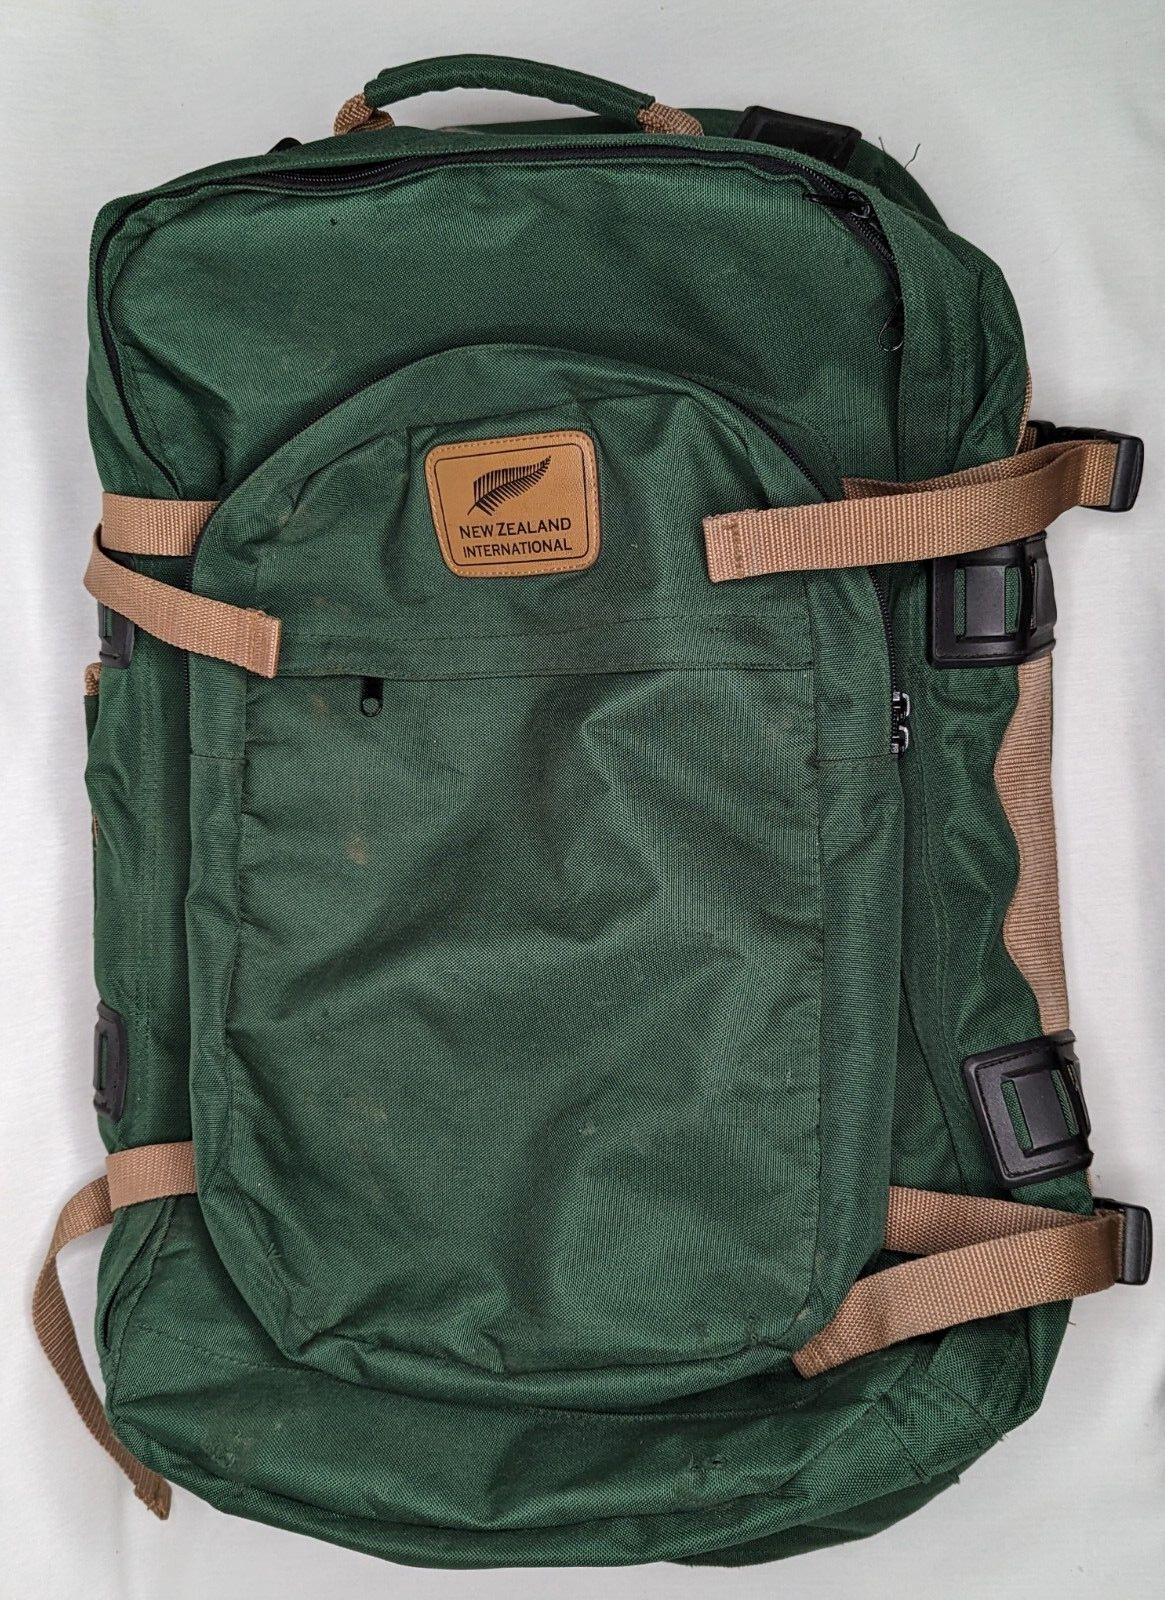 New Zealand International Travel Backpack Green Hiking Shoulder Bag 22x12